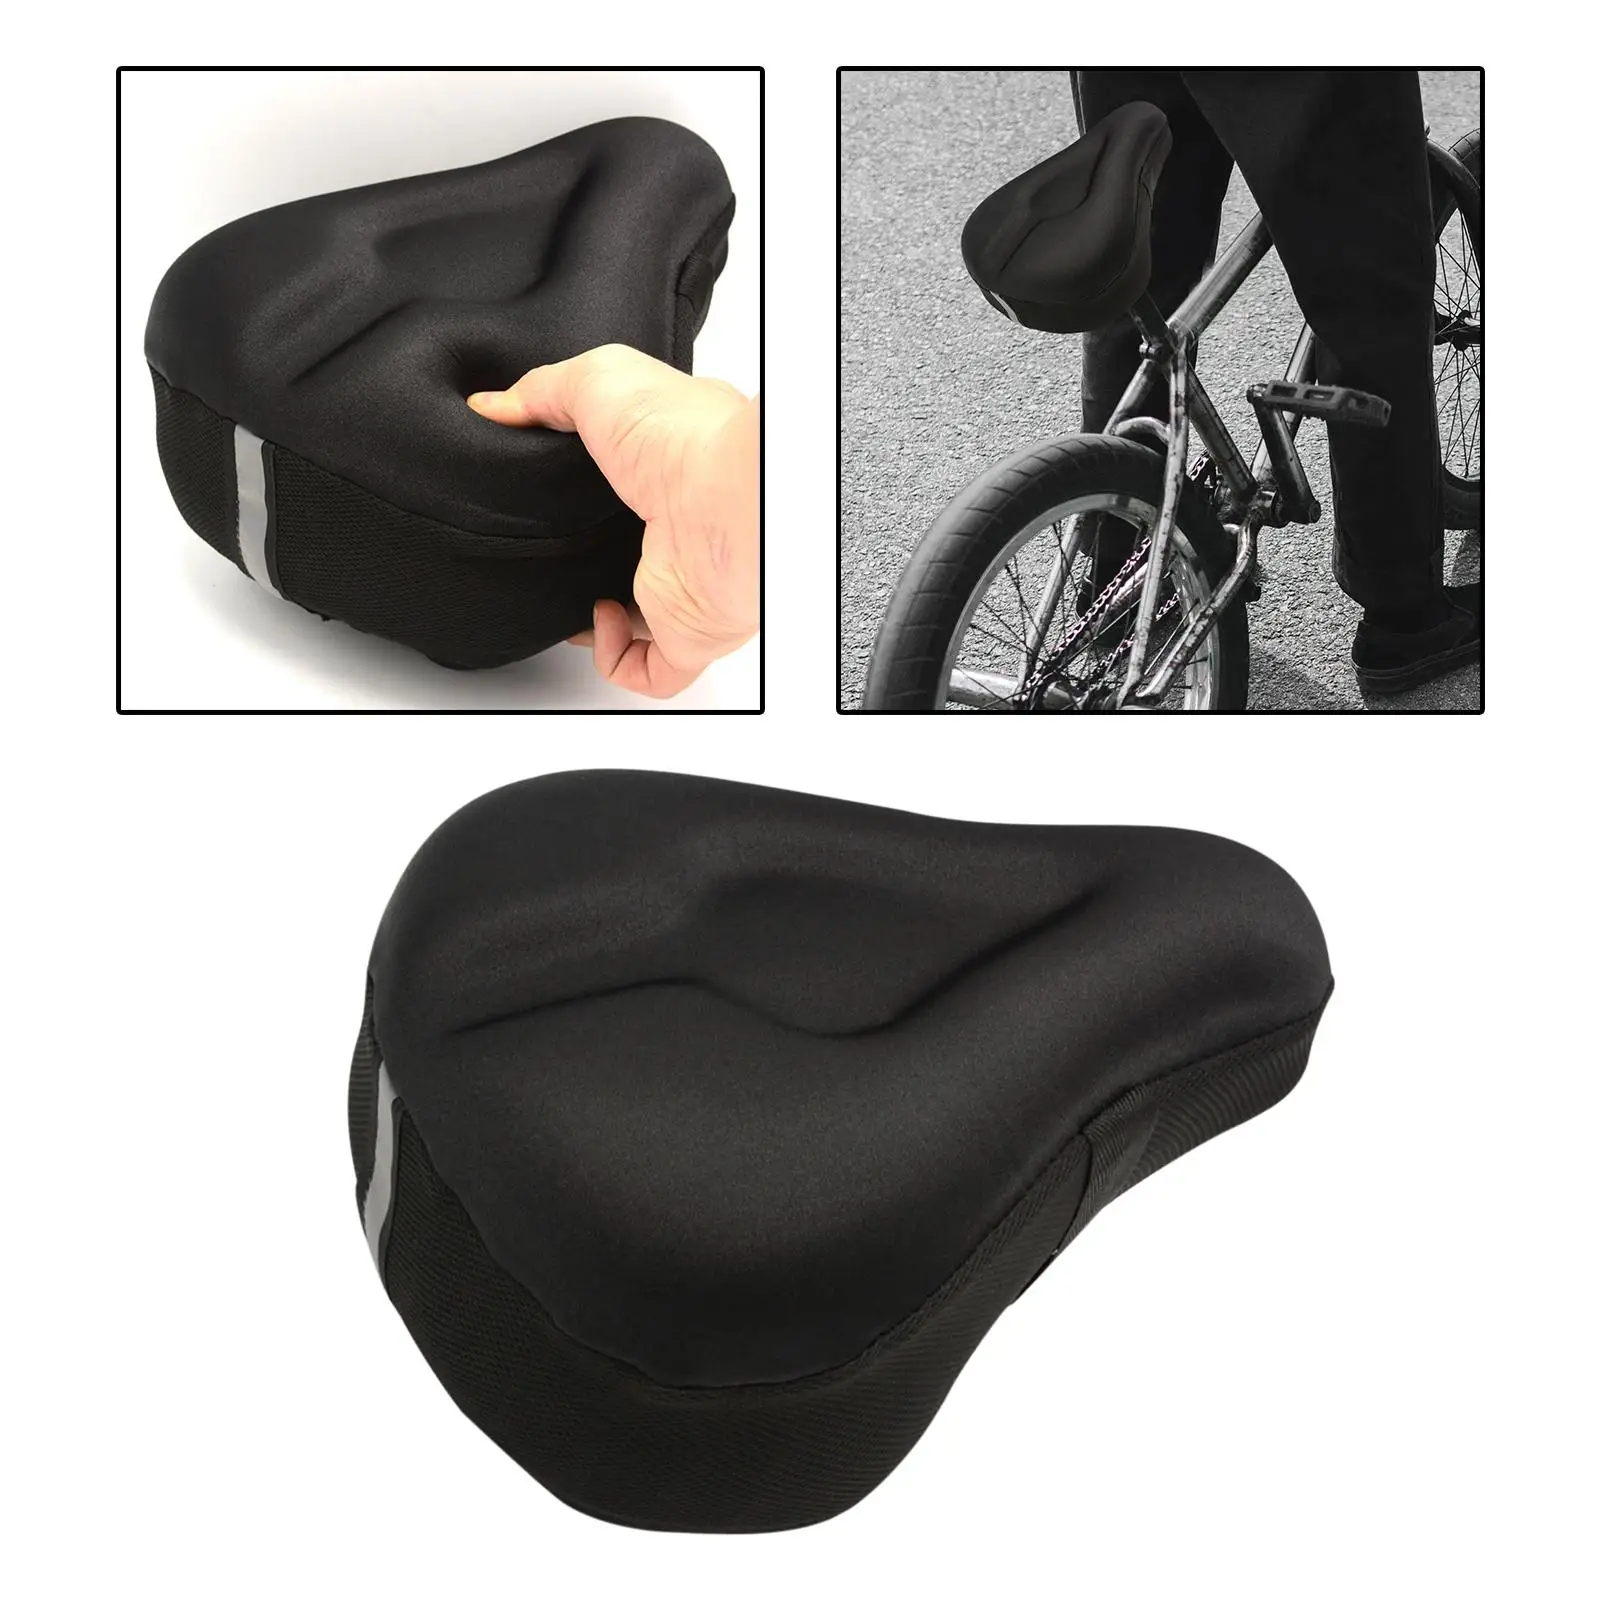 Seats Pad Seat Gel Bike Air Cushion